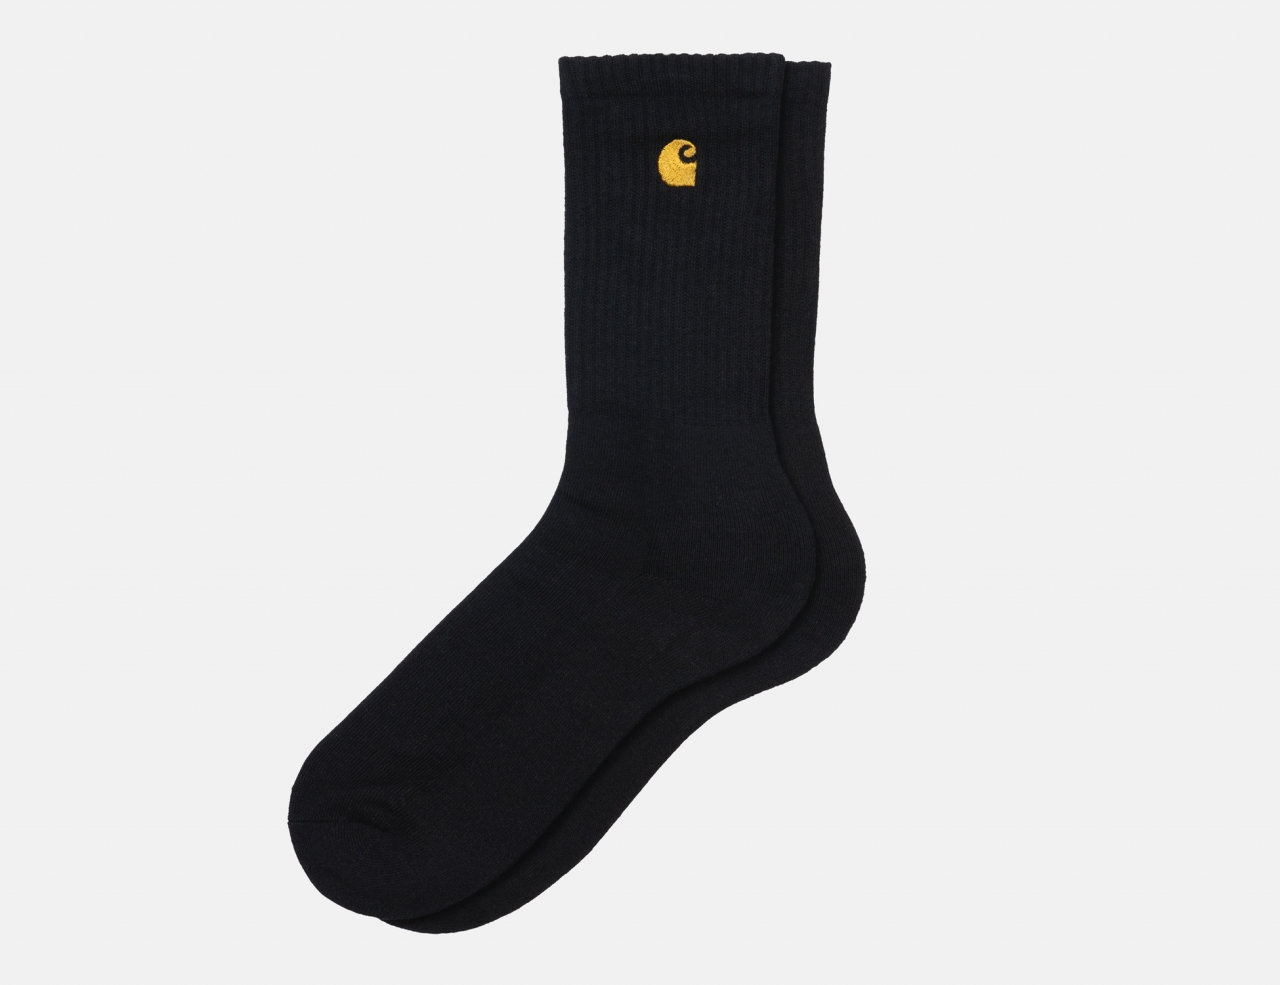 Carhartt WIP Chase Socks - Black / Gold